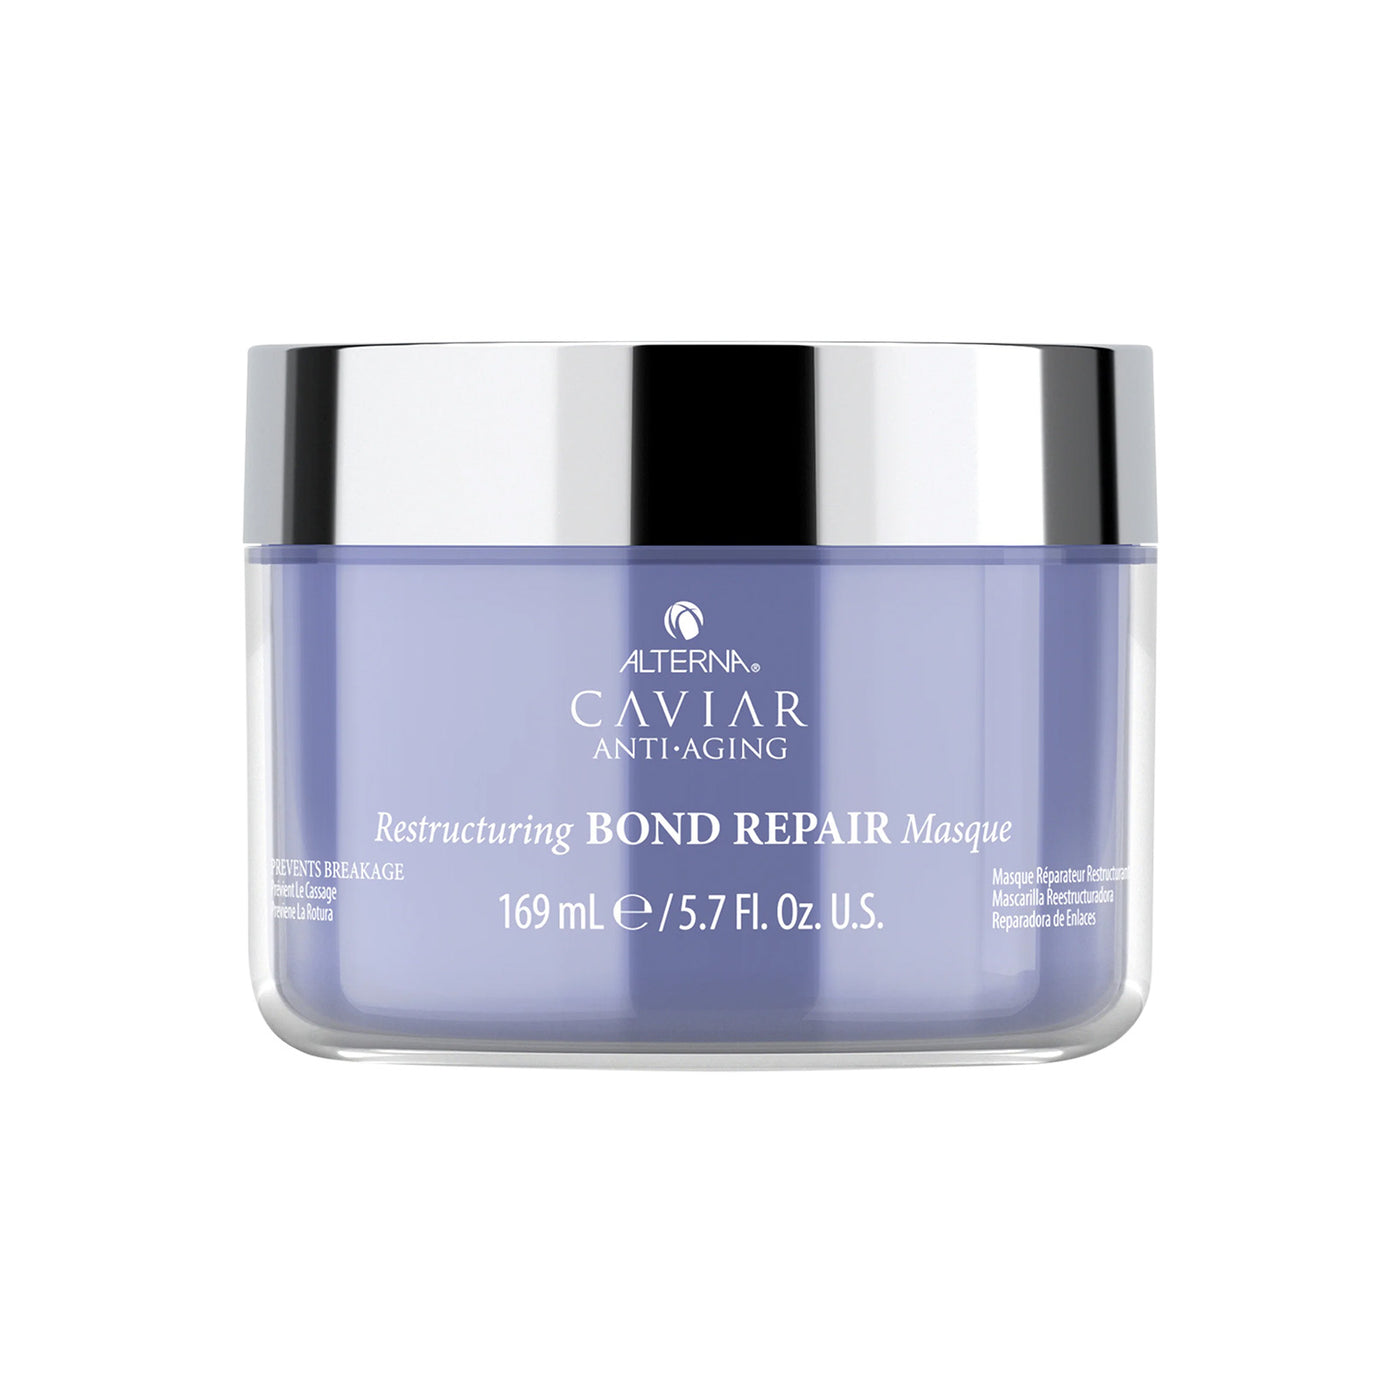 Alterna Caviar Anti-Aging Restructuring Bond Repair Hair Masque 169ml